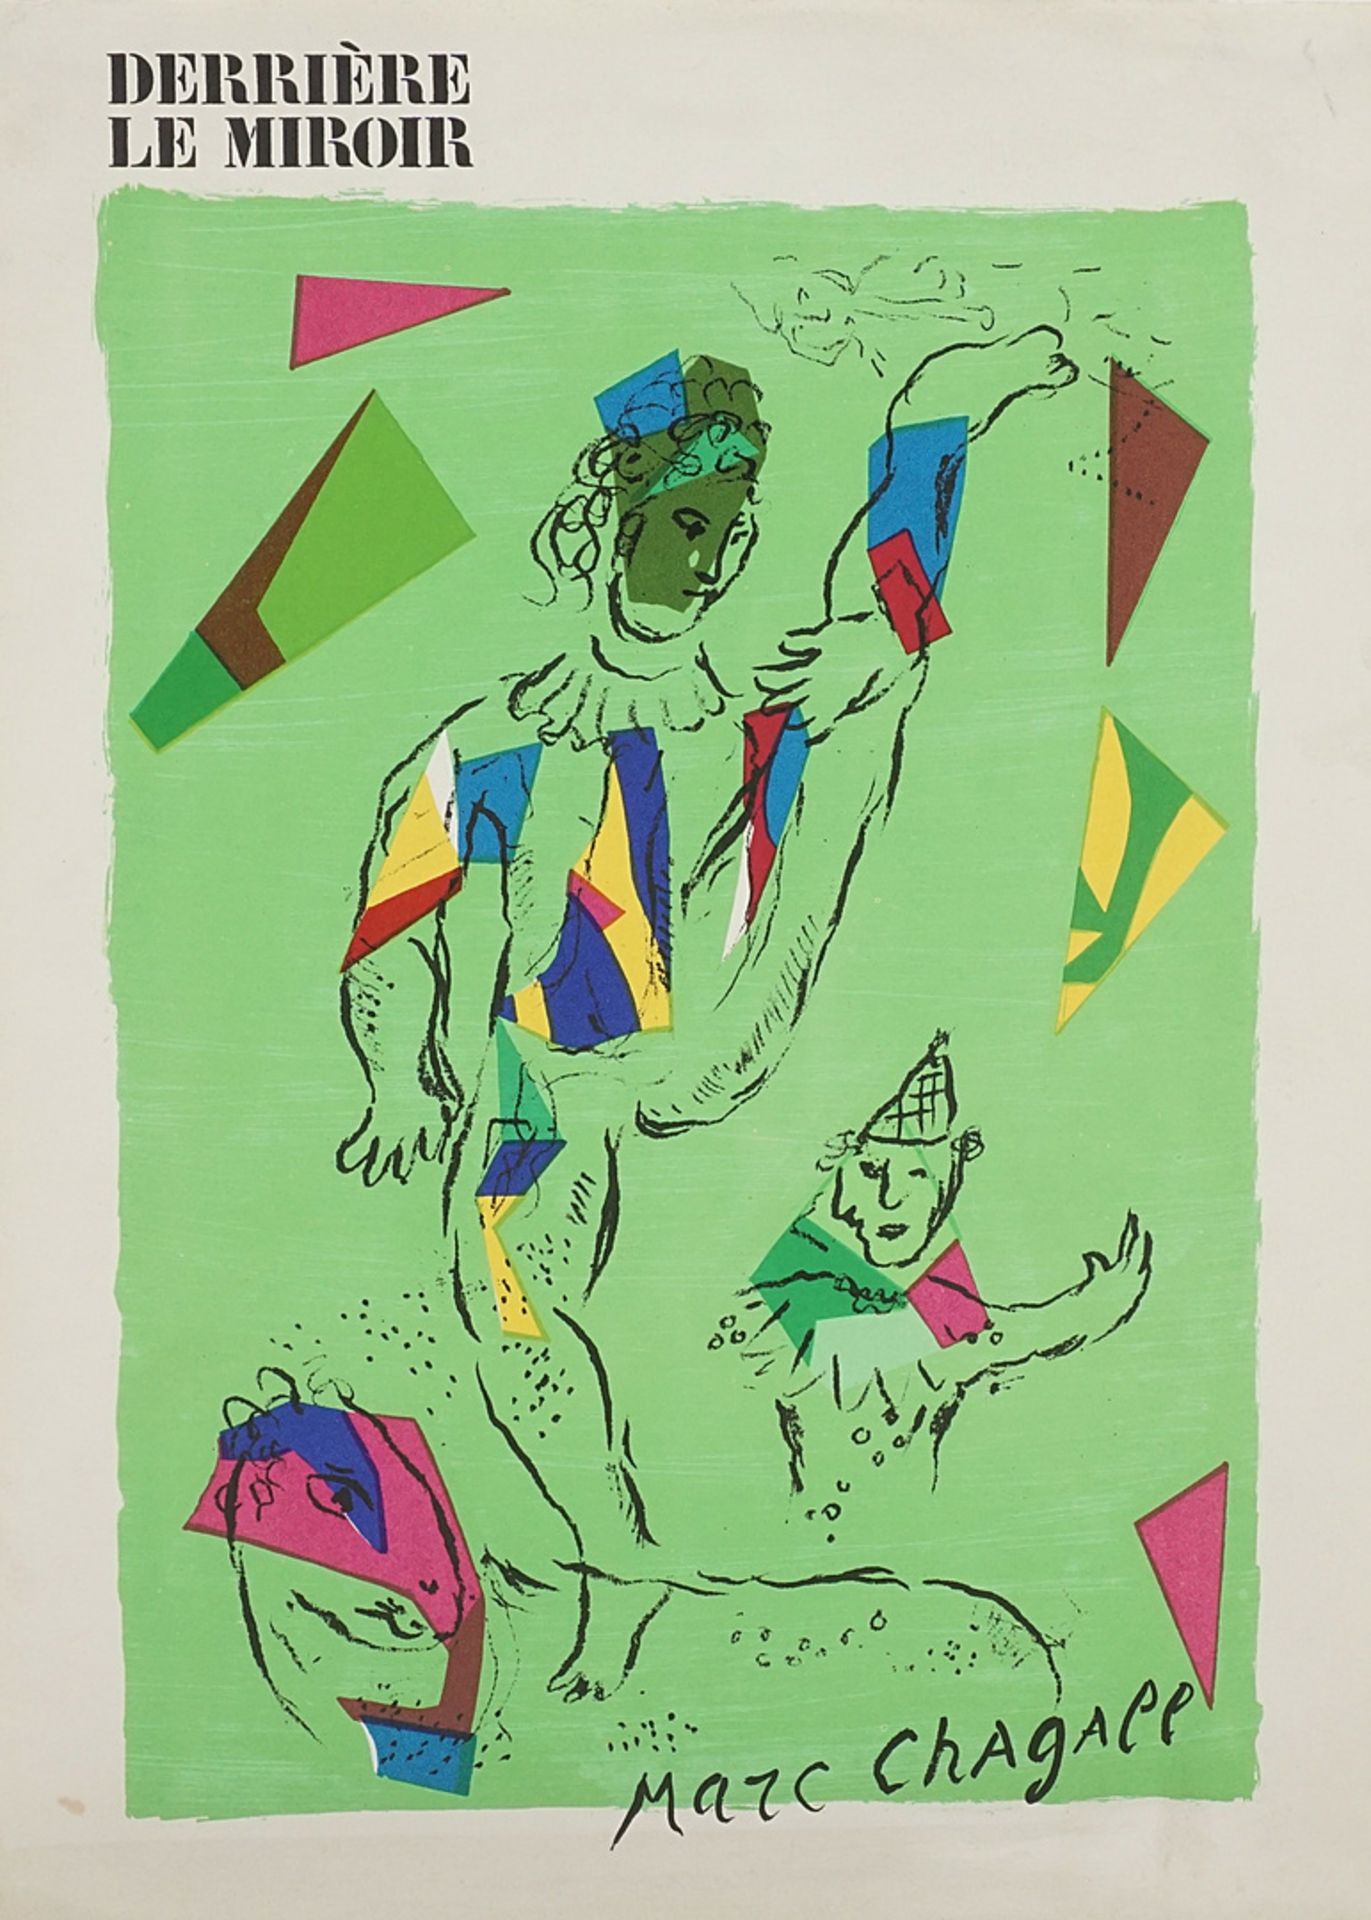 Marc Chagall (1887-1985), "L'Acrobate vert" (The Green Acrobat)